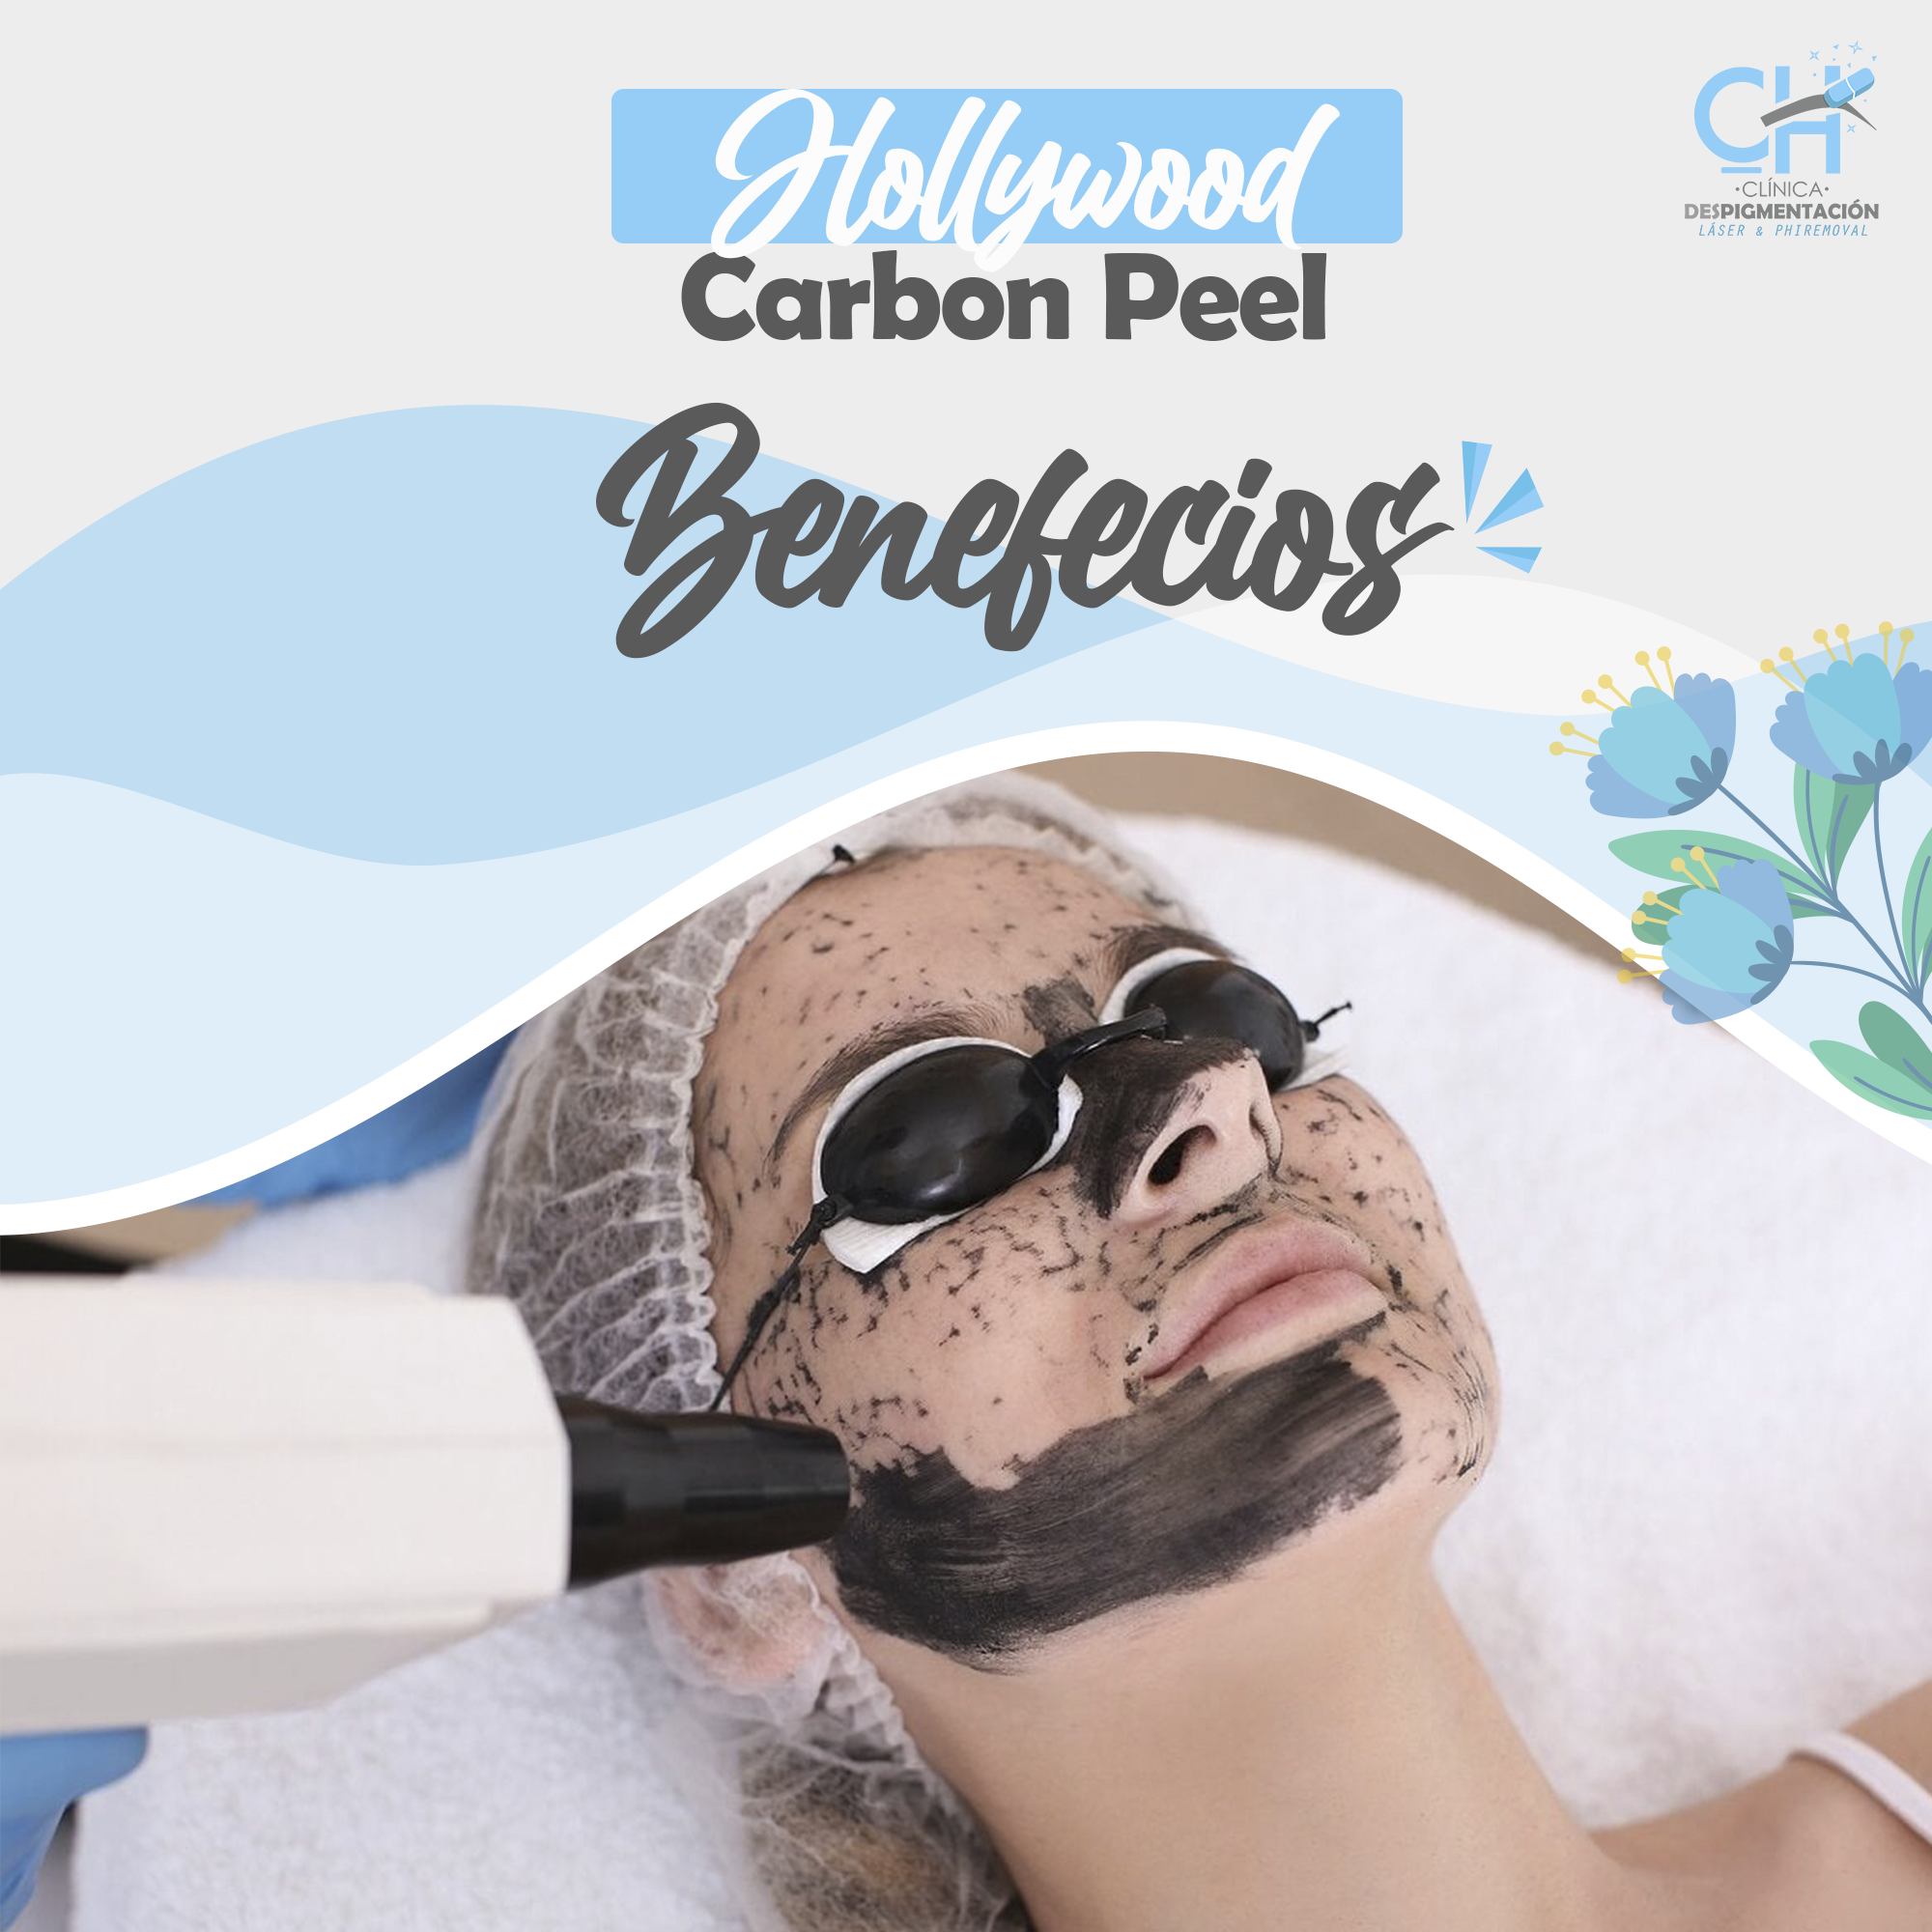 Hollywood Carbon Peel